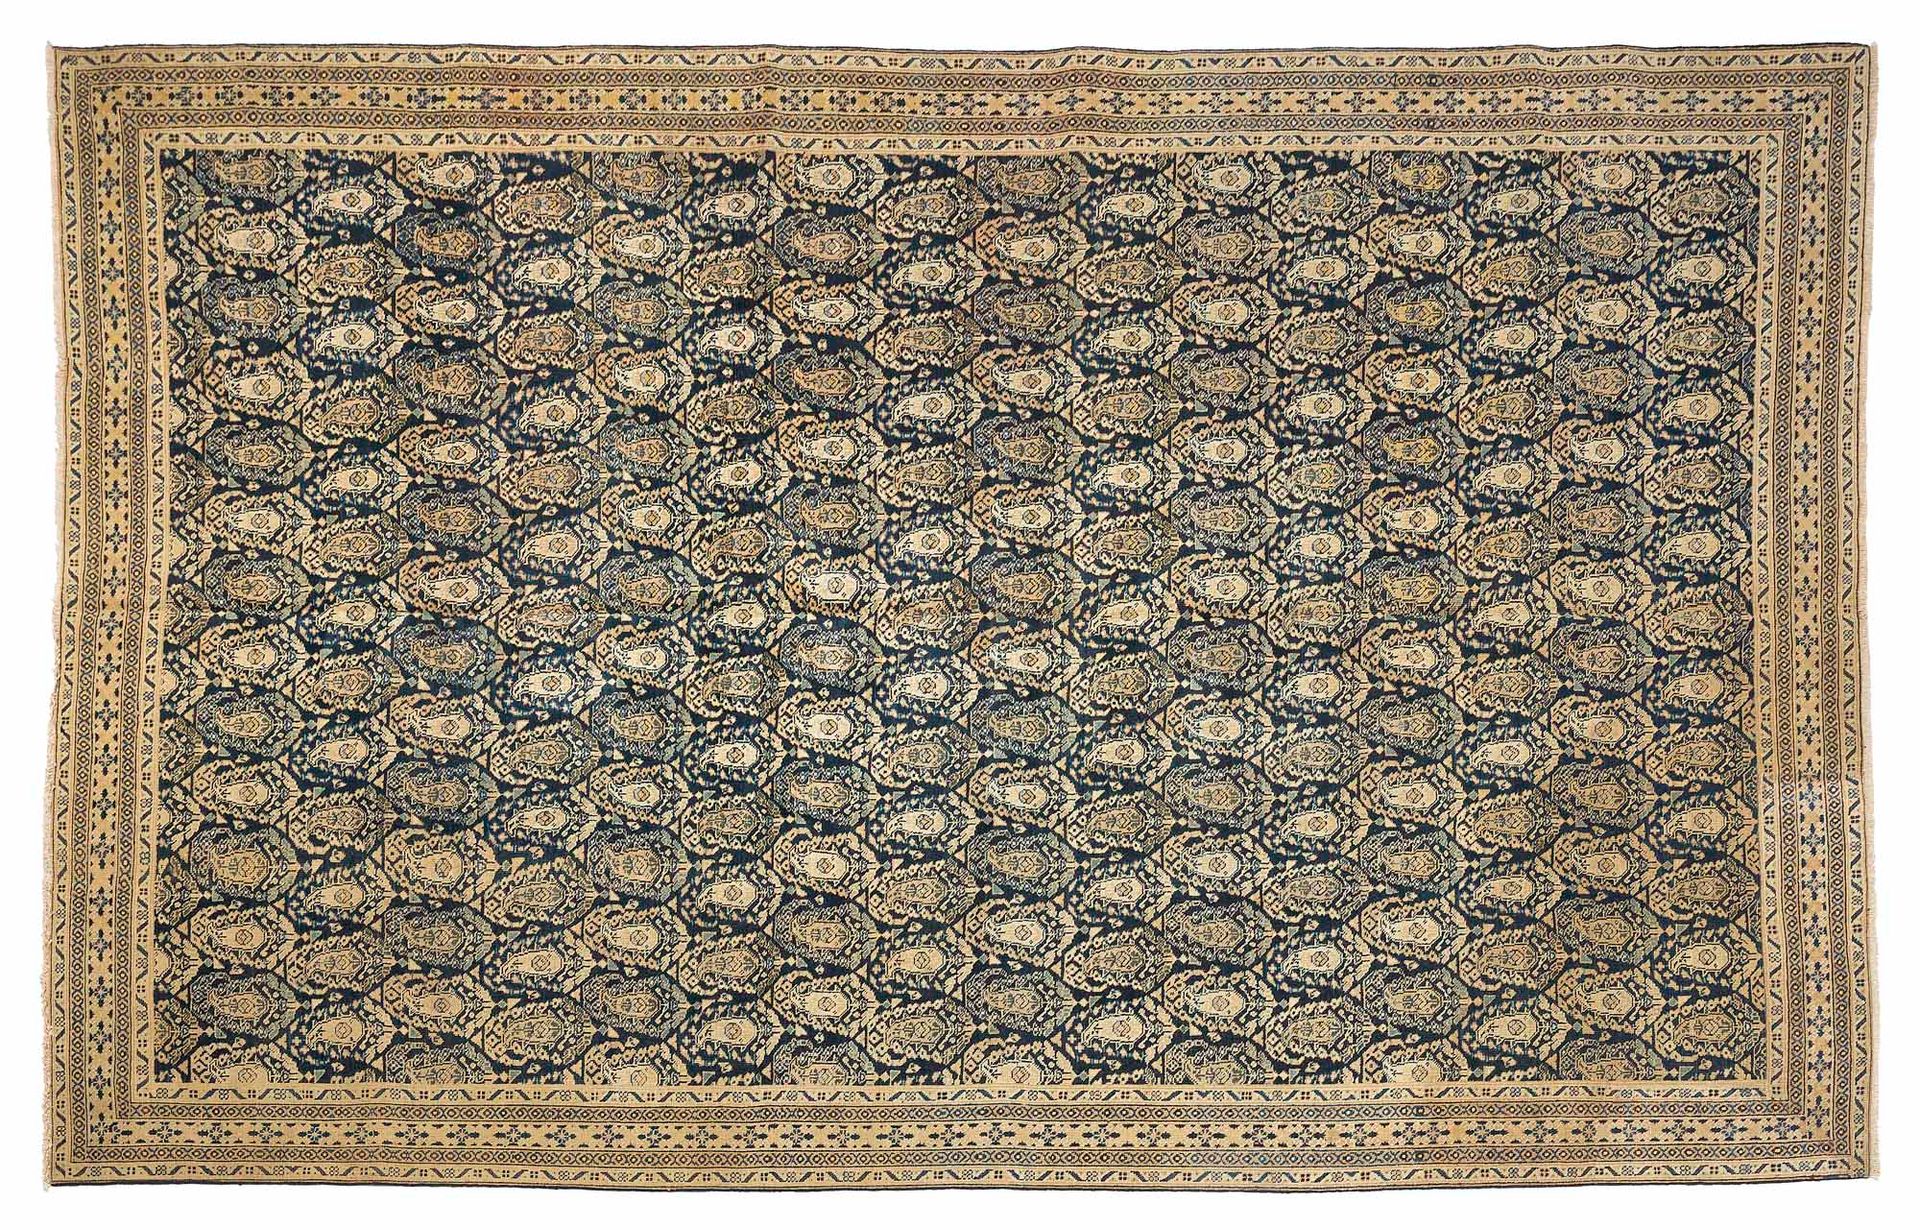 Null TABRIZ地毯（波斯），20世纪前三分之一时期

尺寸：355 x 226厘米。

技术特点 : 羊毛丝绒，棉质基础。

午夜的蓝色领域覆盖着播种的&hellip;